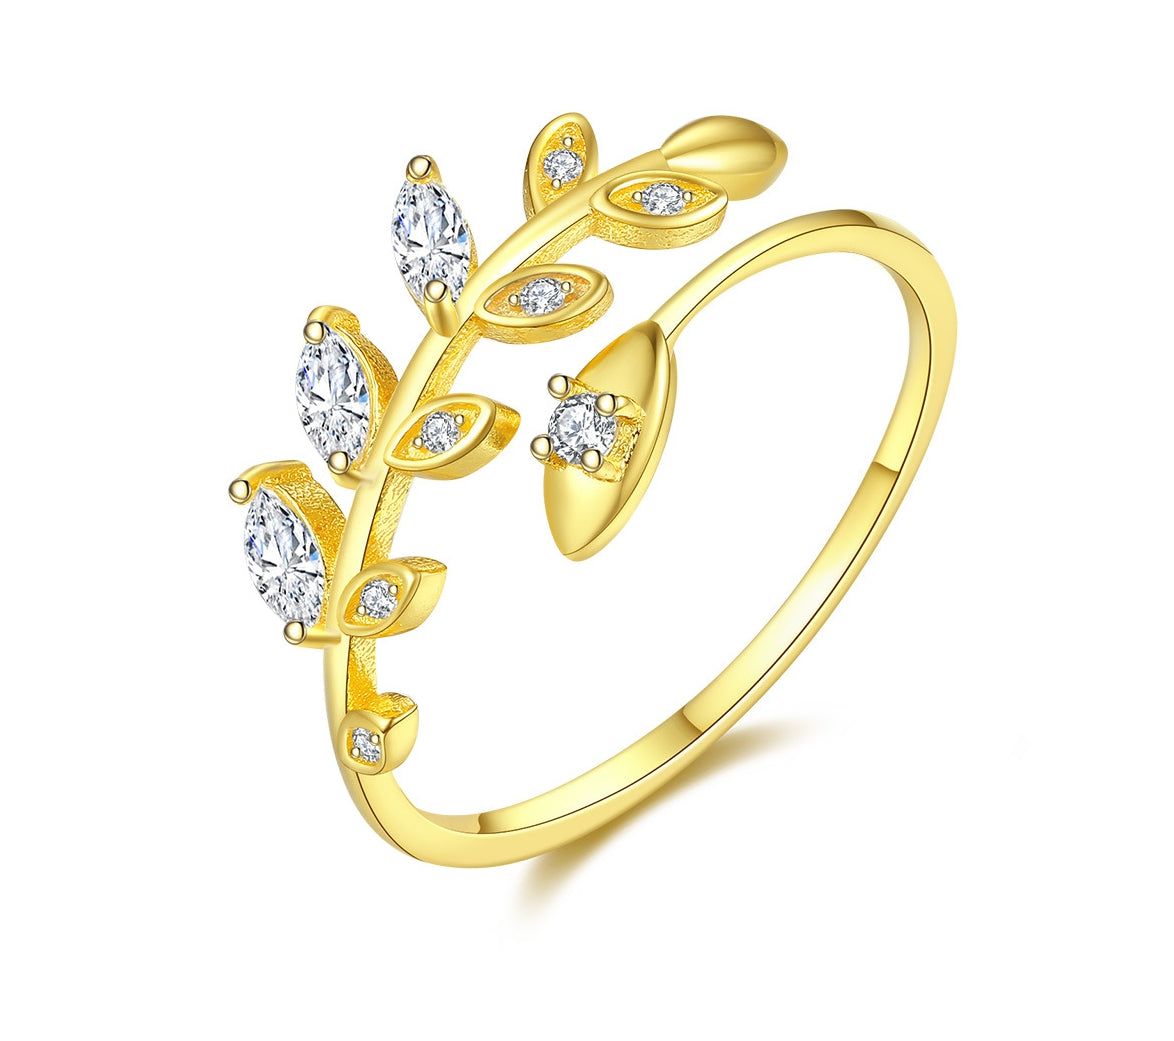 Gold Chunky Adjustable Ring, Brushed Gold Dipped Hammered Ring, Thumb Ring,  Boho | eBay